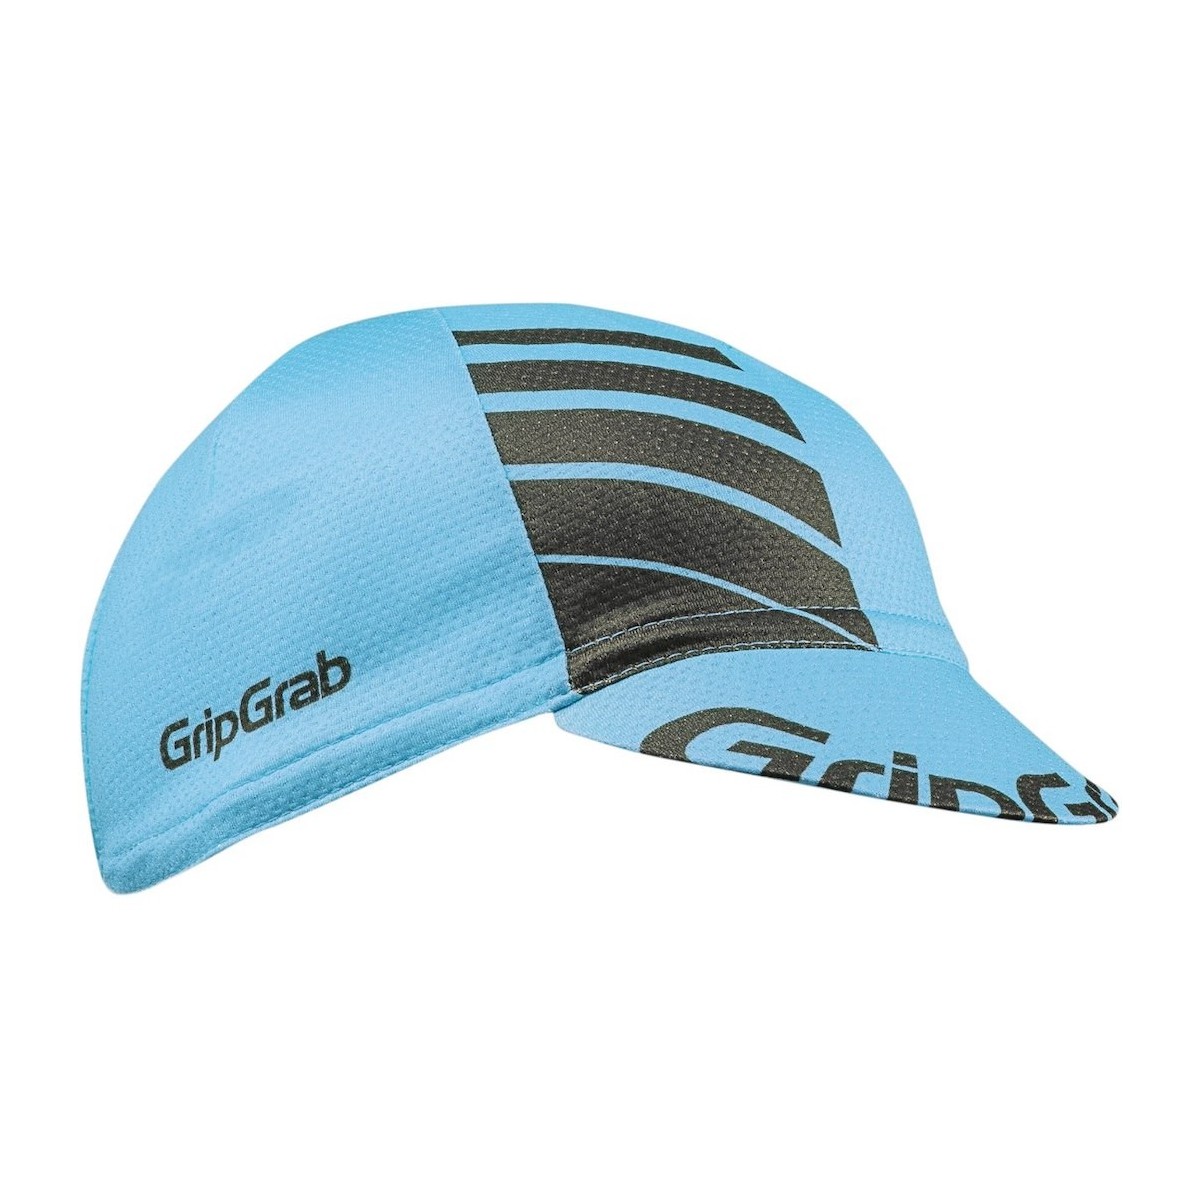 GRIPGRAB Lightweight Summer cycling cap - blue/black